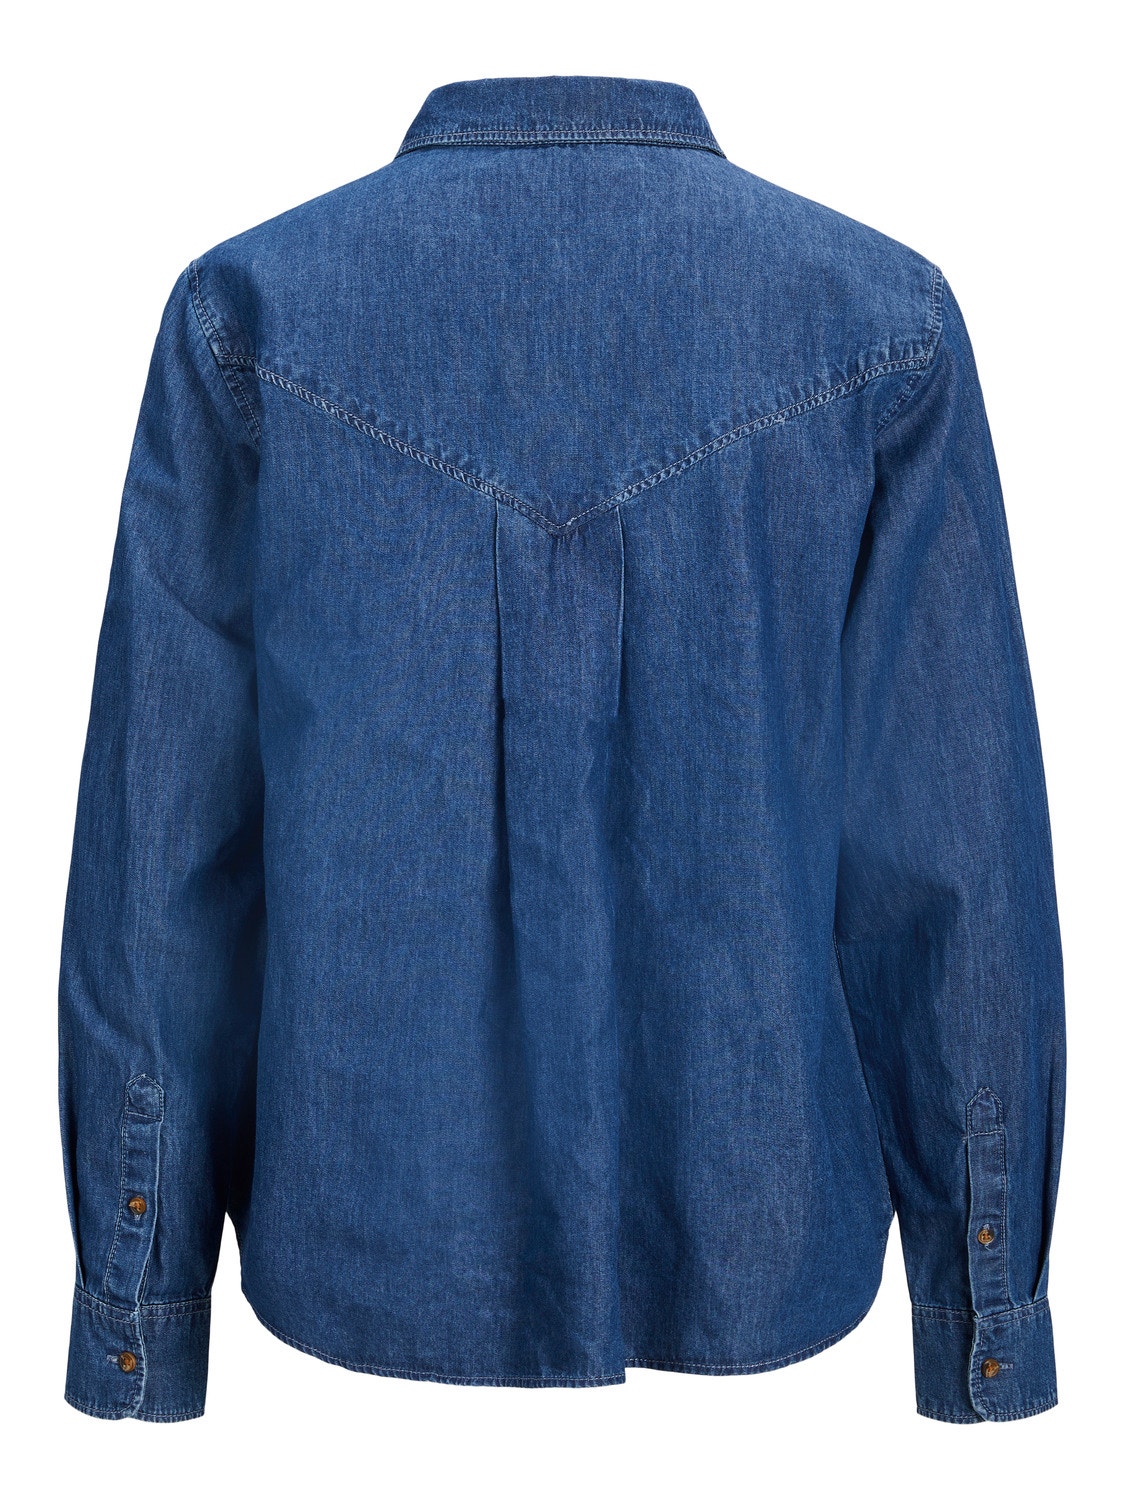 JJXX JXCORA Denim Shirt -Medium Blue Denim - 12200315